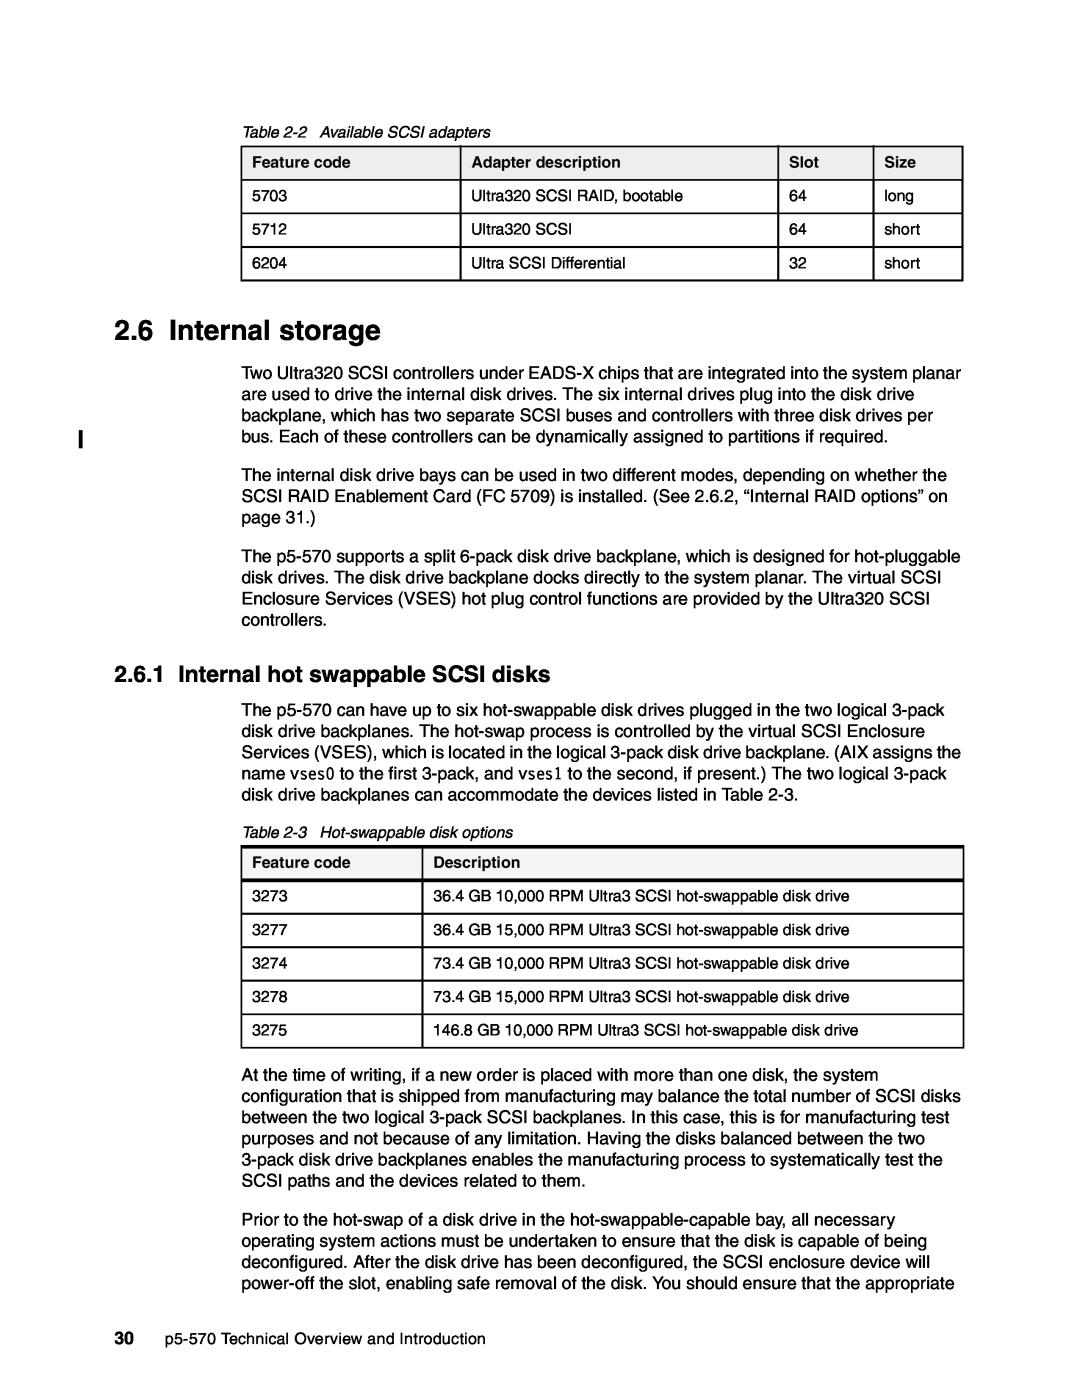 IBM P5 570 manual Internal storage, Internal hot swappable SCSI disks 